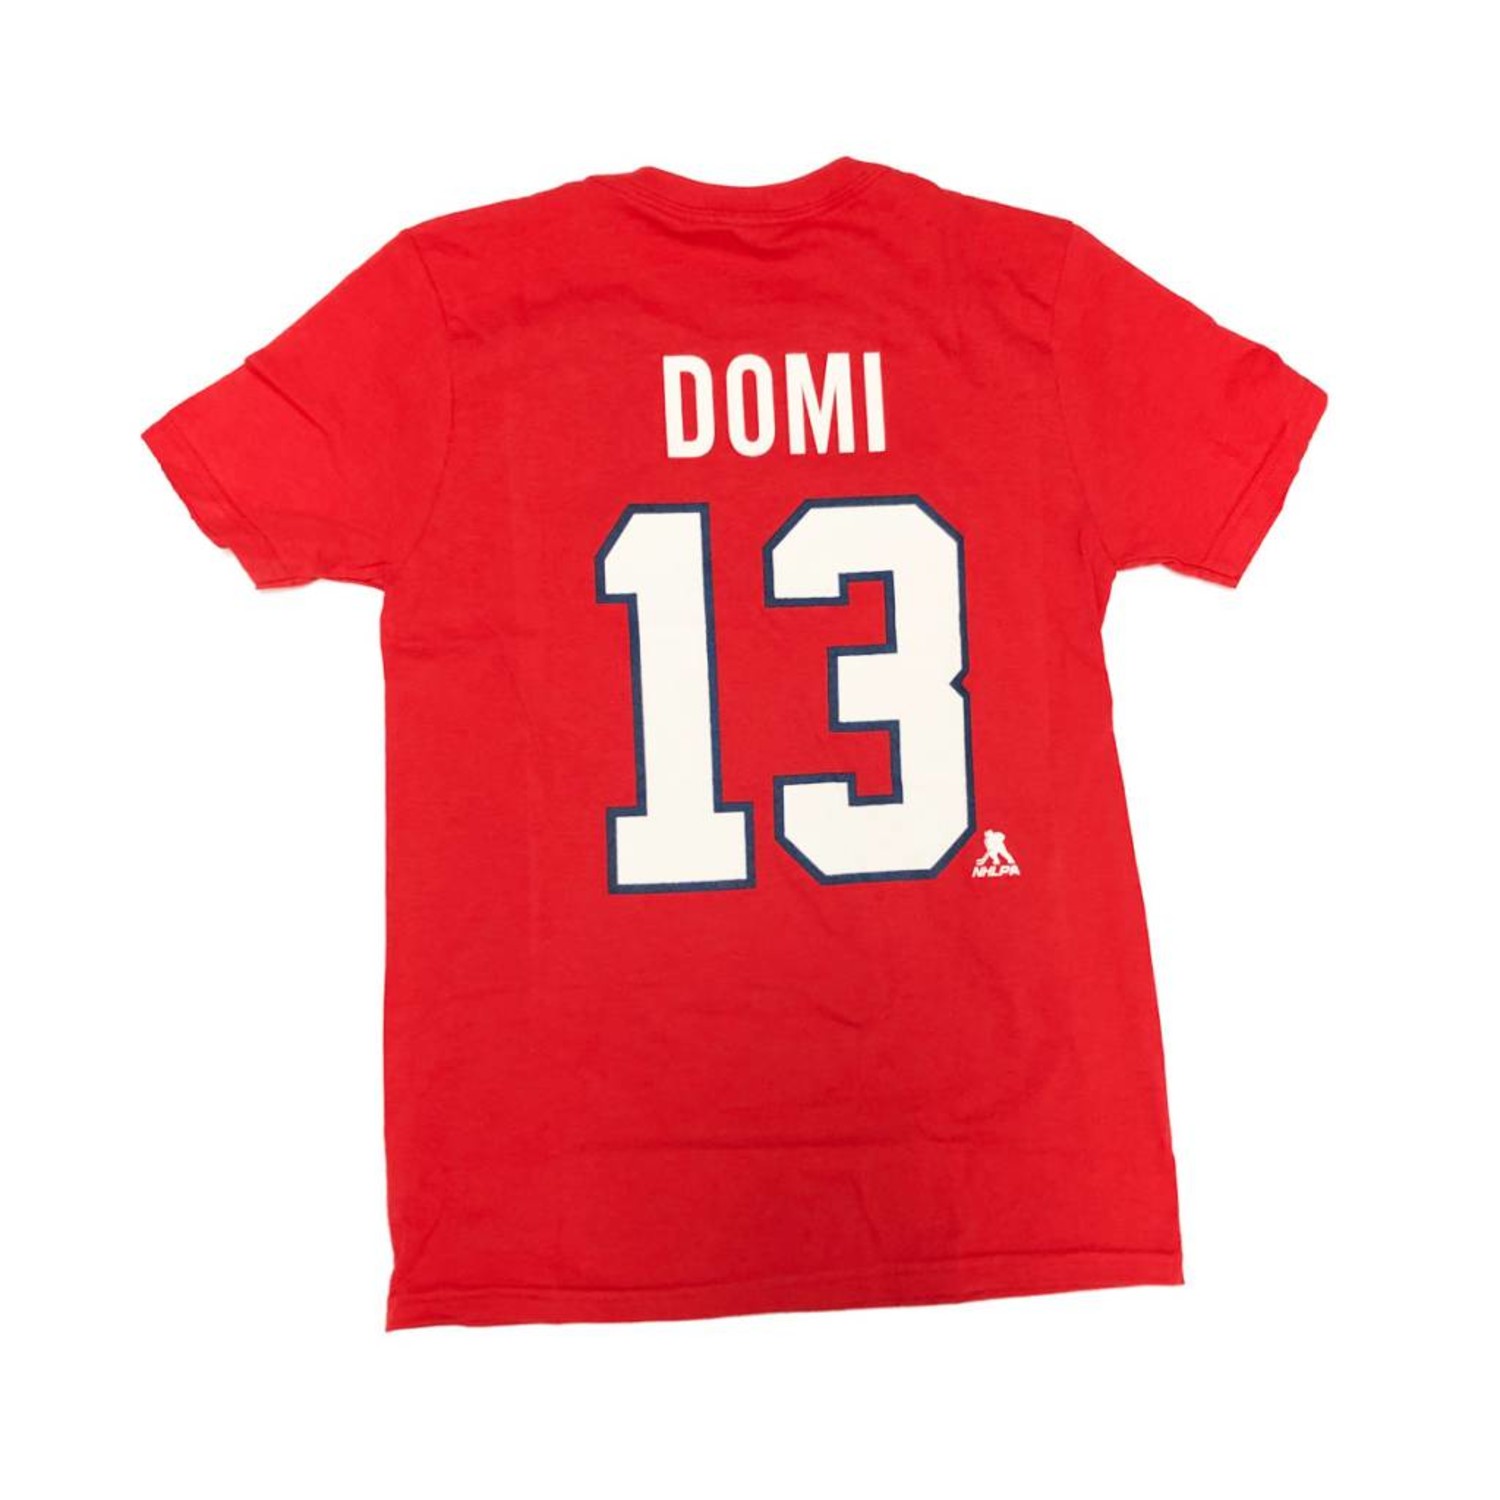 Max Domi #13 Kid's Player T-Shirt 